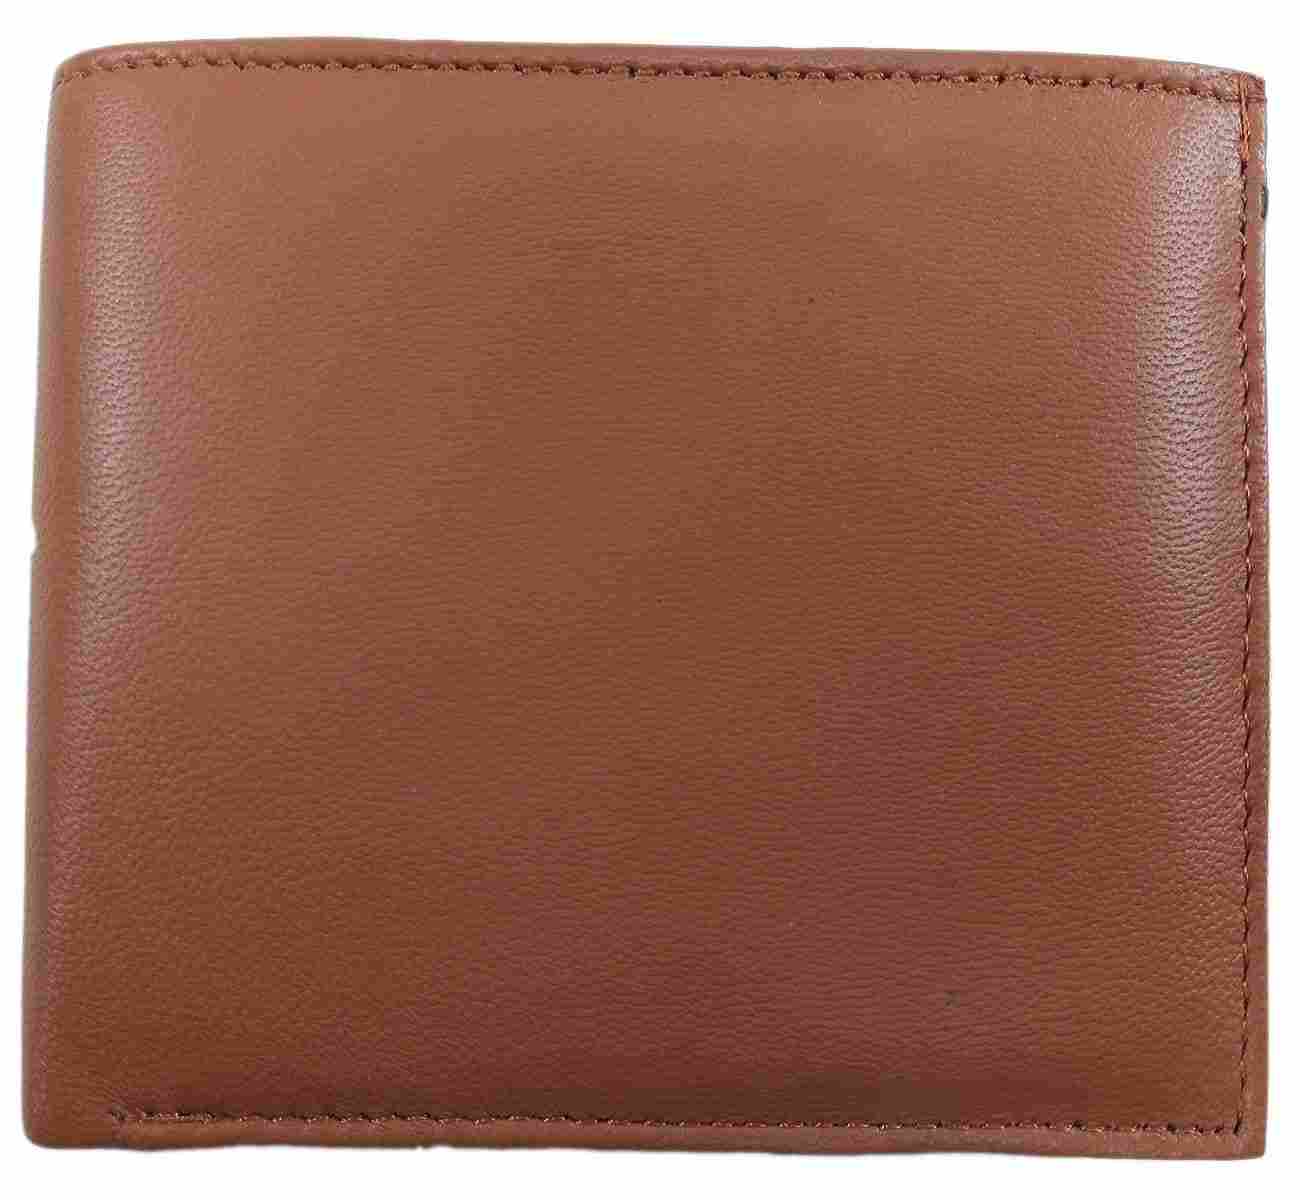 Shop Wallets For Men At INR 599 | LBB